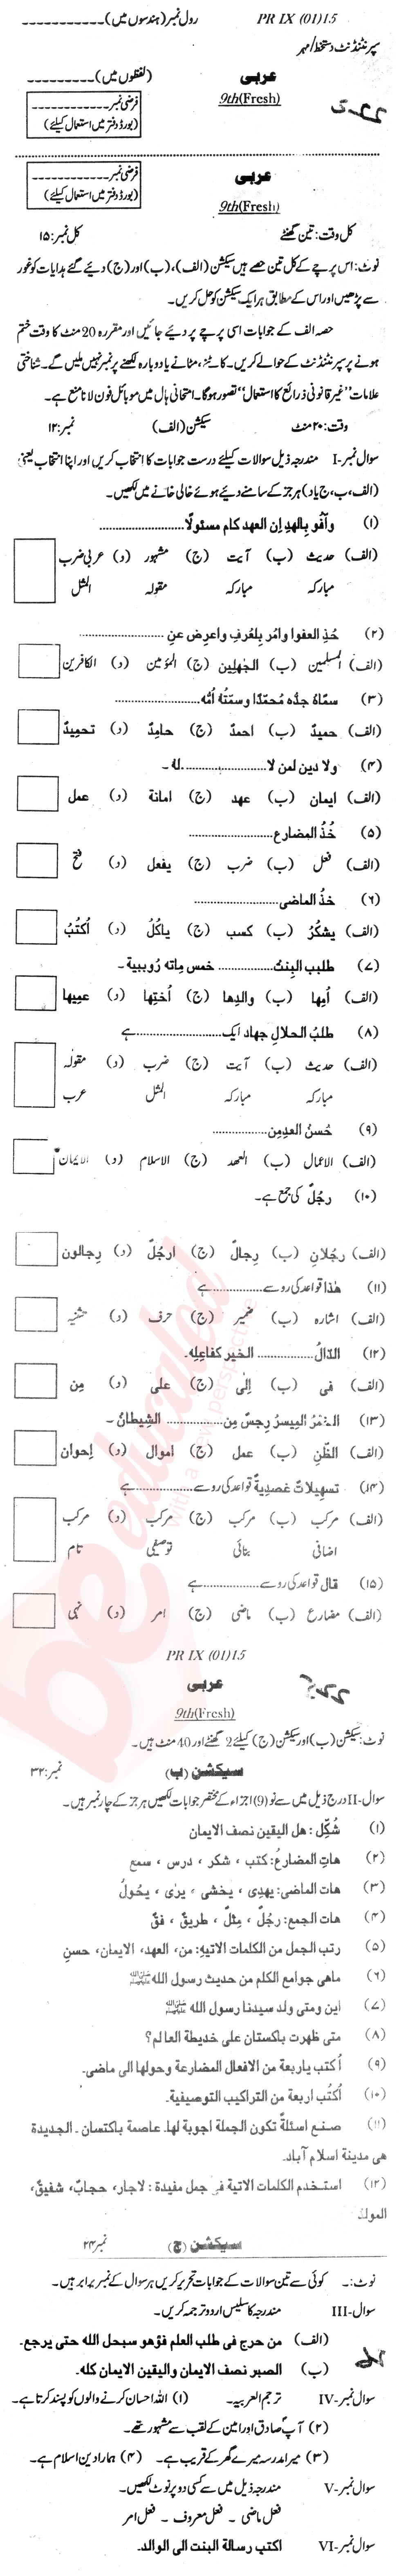 Arabic 9th Urdu Medium Past Paper Group 1 BISE Mardan 2012